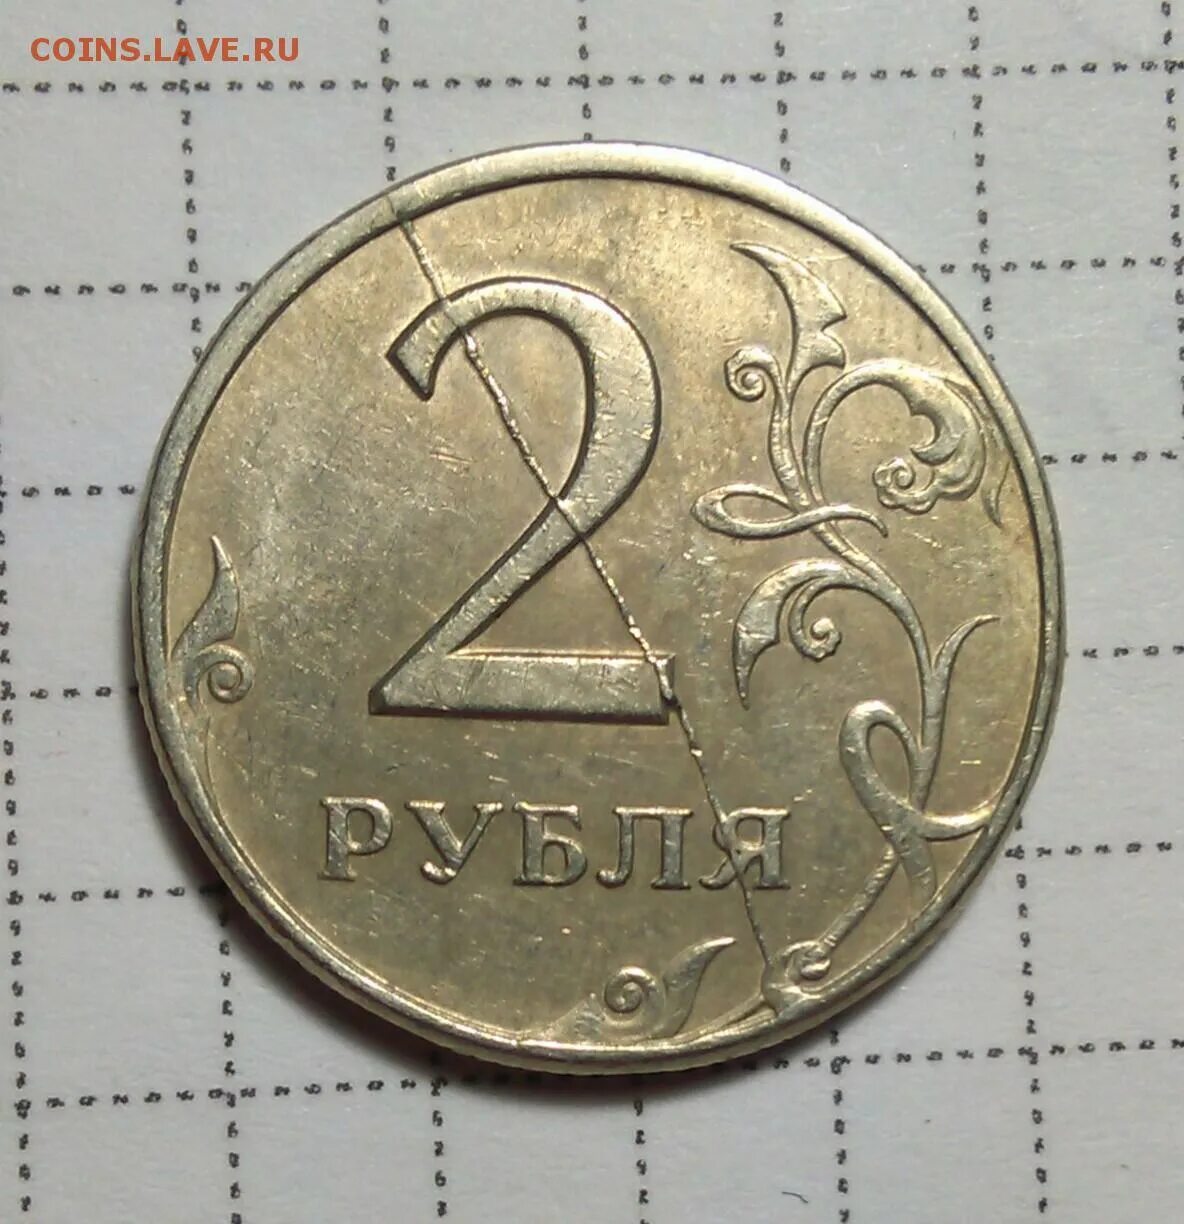 Монета 2 рубля 1997 СПМД. Монета 2 рубля 1997 года СПМД. Реверс монеты два €. Медные 2 рубля 1997 года. 2 рубль 1997 года цена стоимость